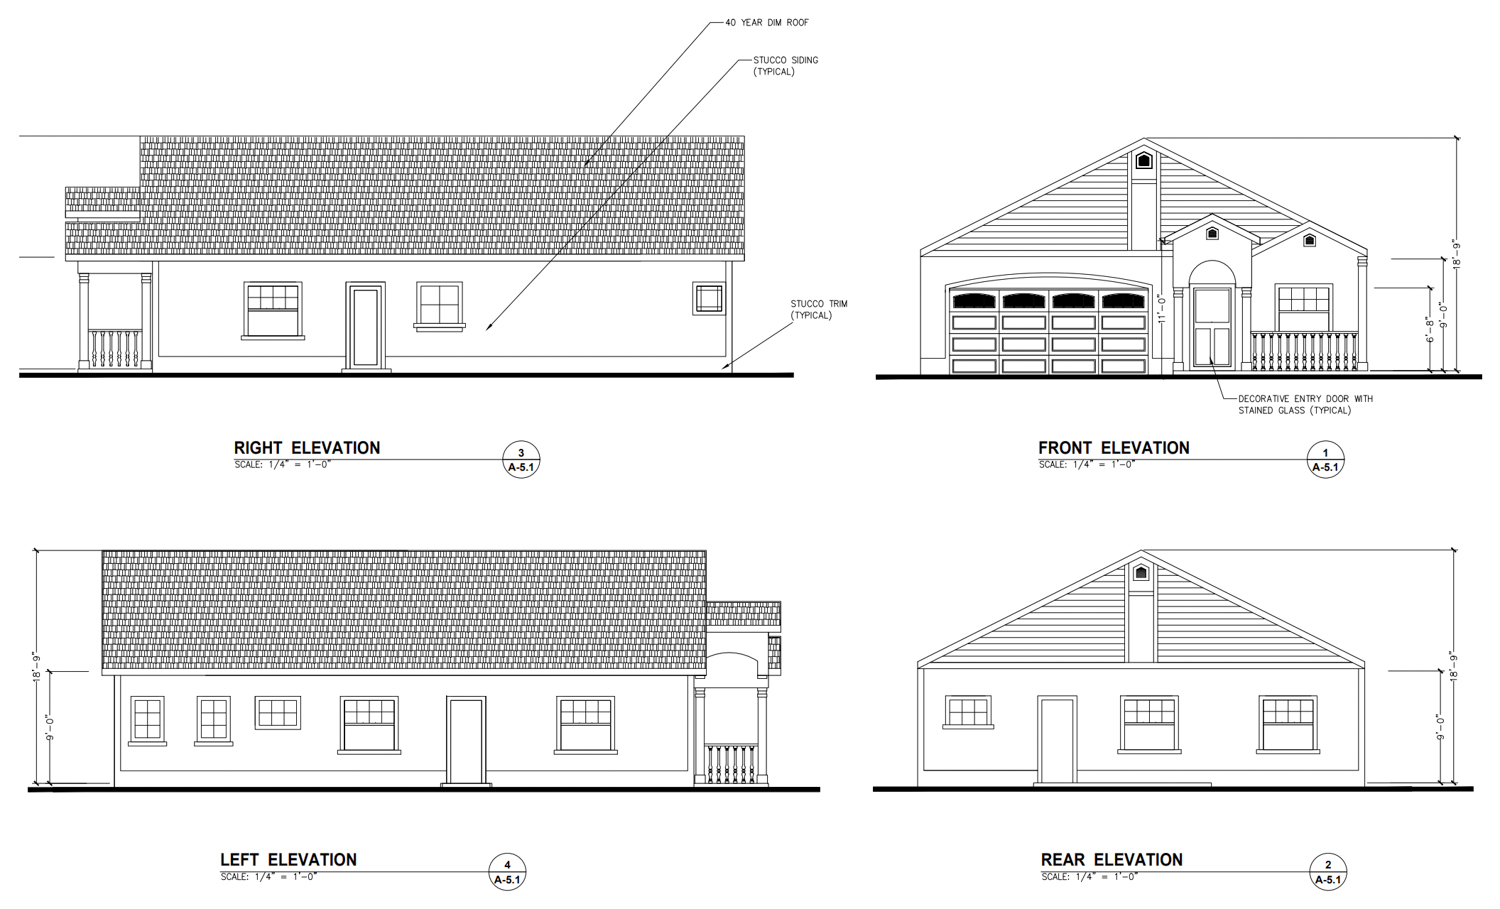 6130 Lemon Hill Avenue house elevation, design by Roseville-based Aras Design & Construction